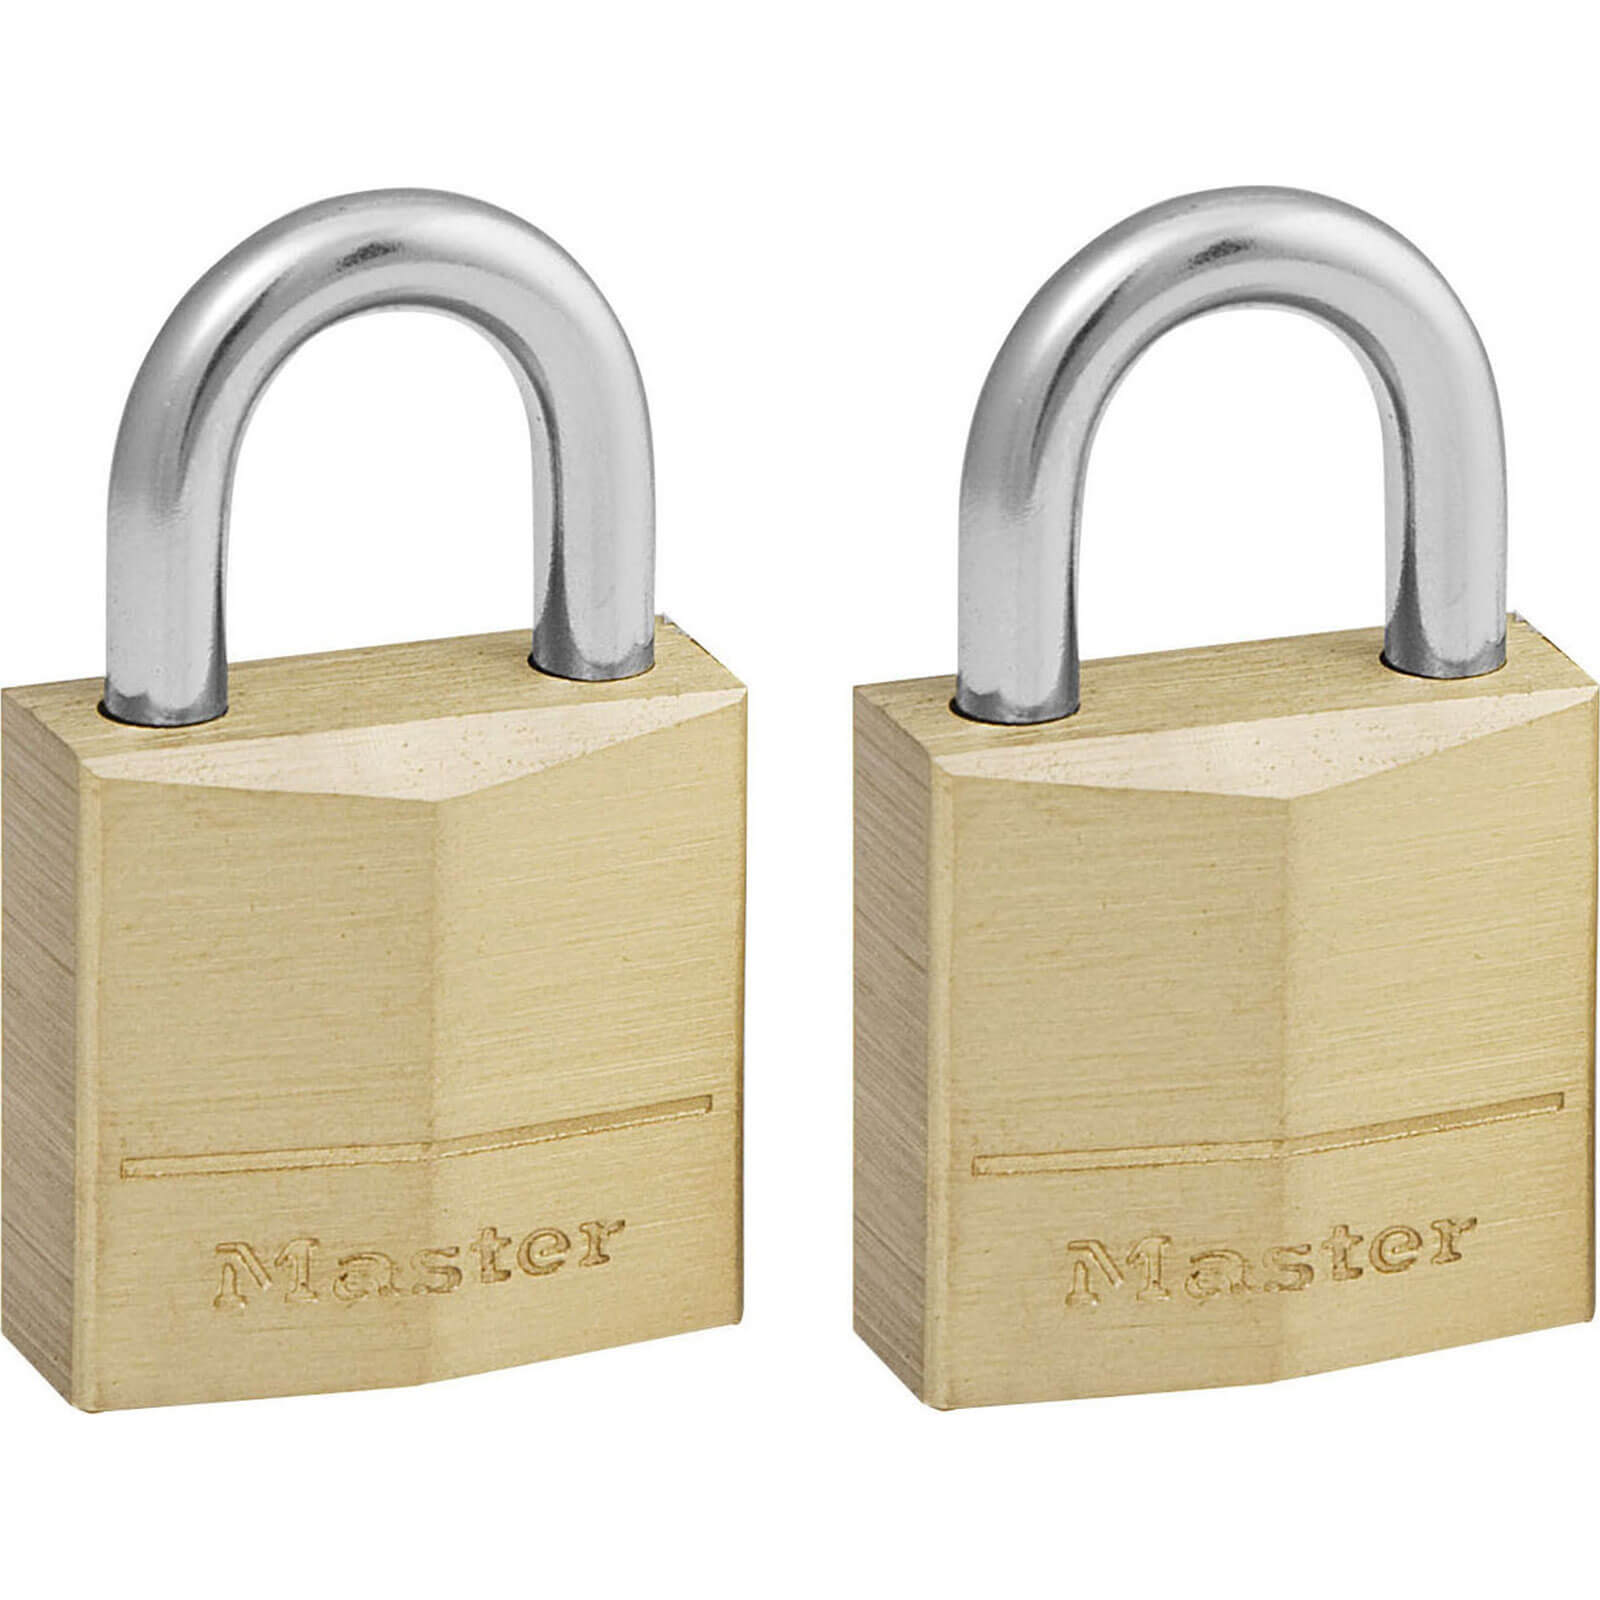 Photos - Door Lock Master Lock Masterlock Solid Brass Padlock Pack of 2 Keyed Alike 20mm Standard 120T 